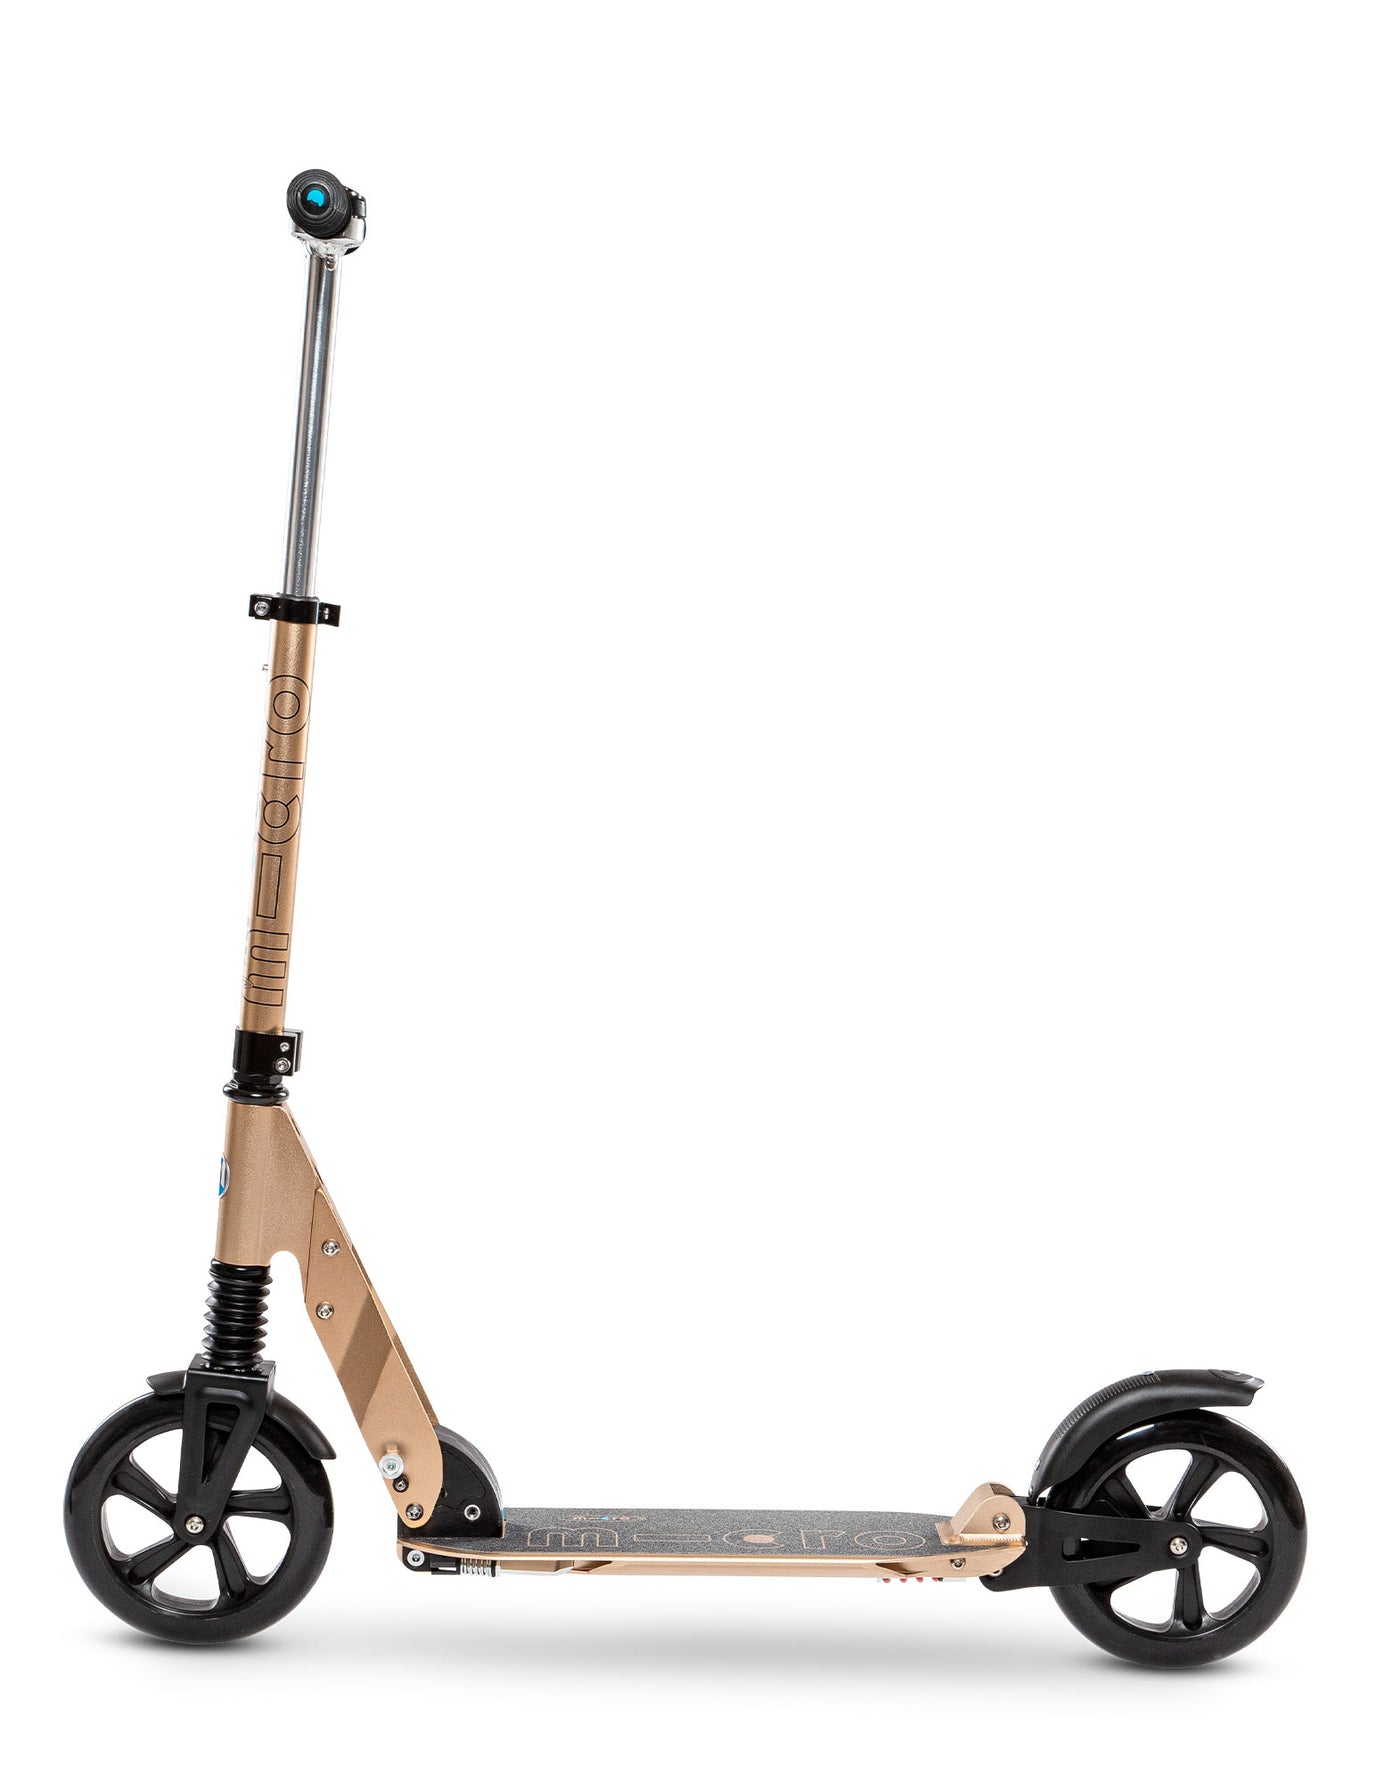 bronze suspension adult scooter side on